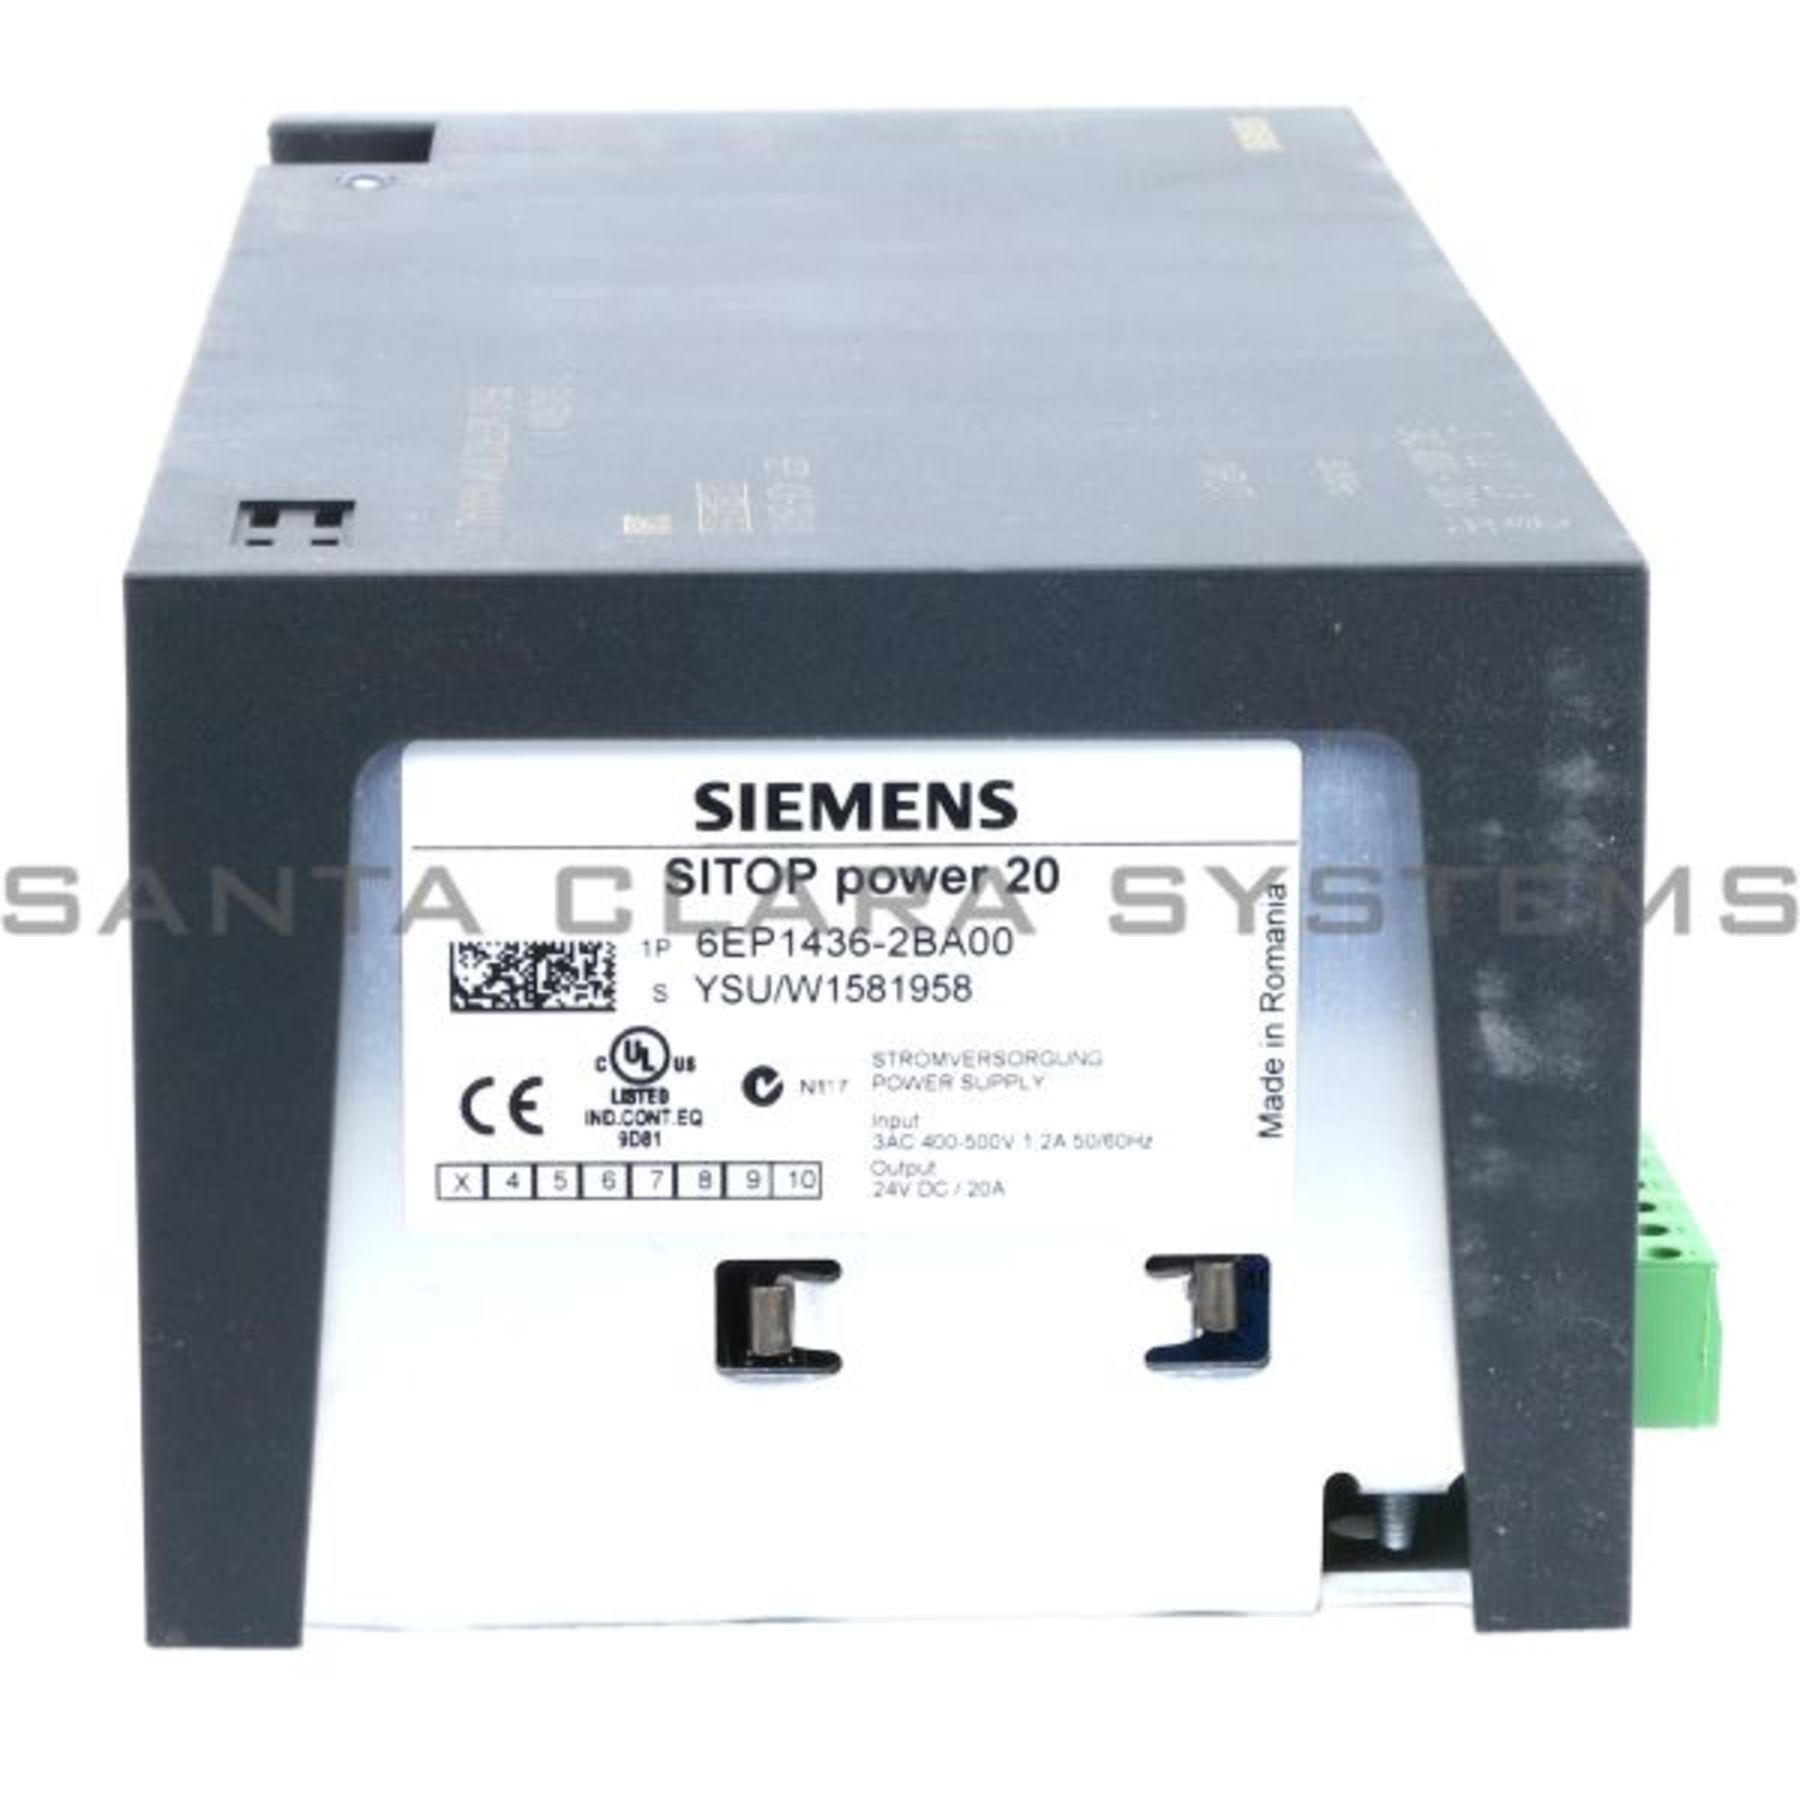 Siemens Sitop Power 20 6EP1 436-2BA00 6EP1436-2BA00 V.03 